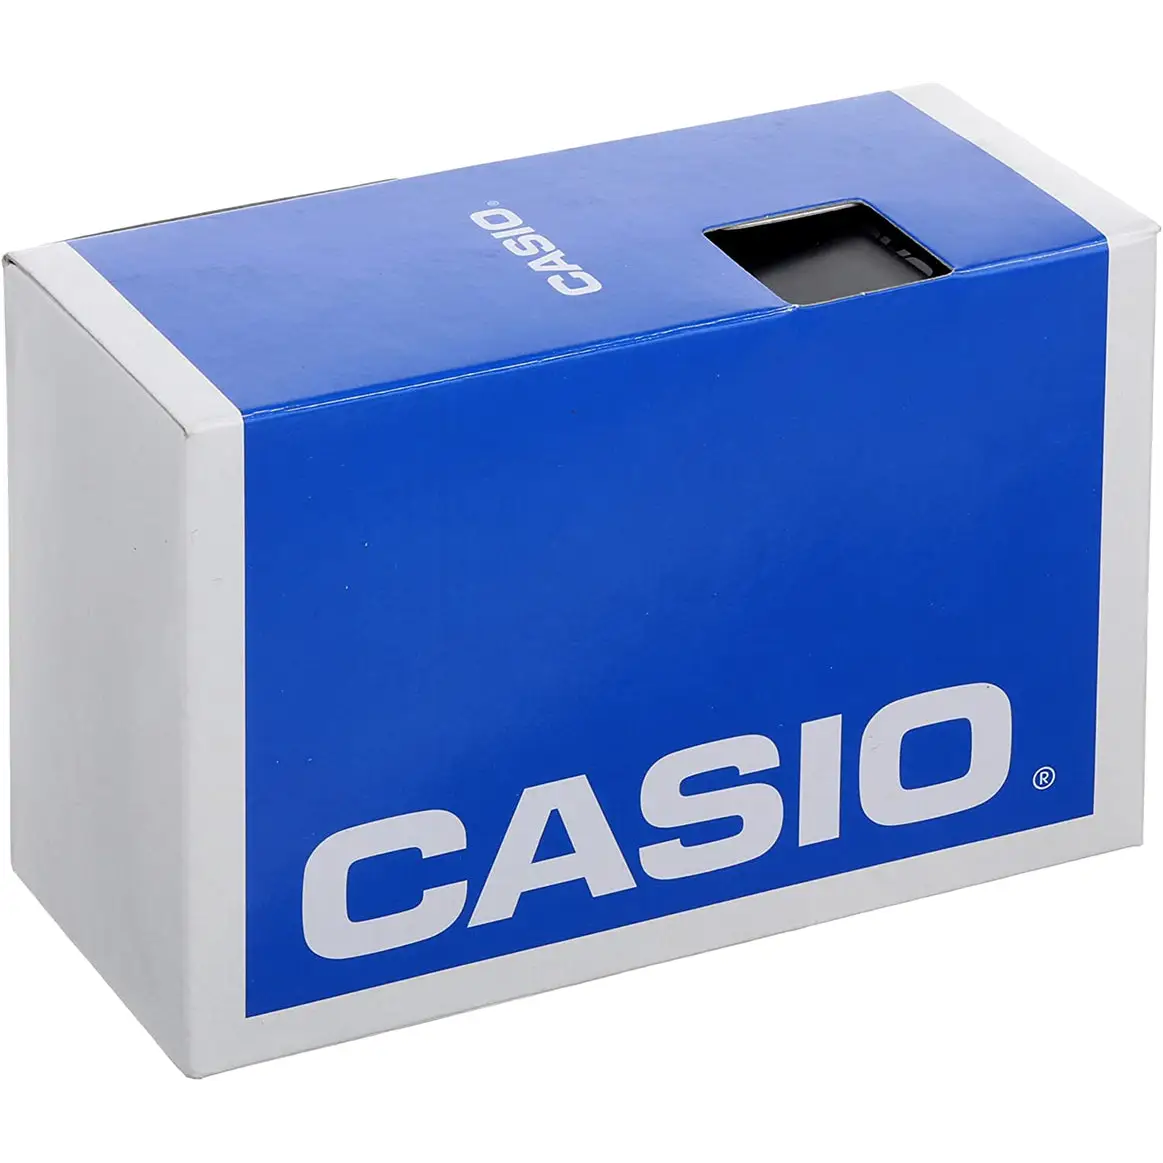 Casio Men’s Digital Quartz LED Light 7-Year Battery Grey